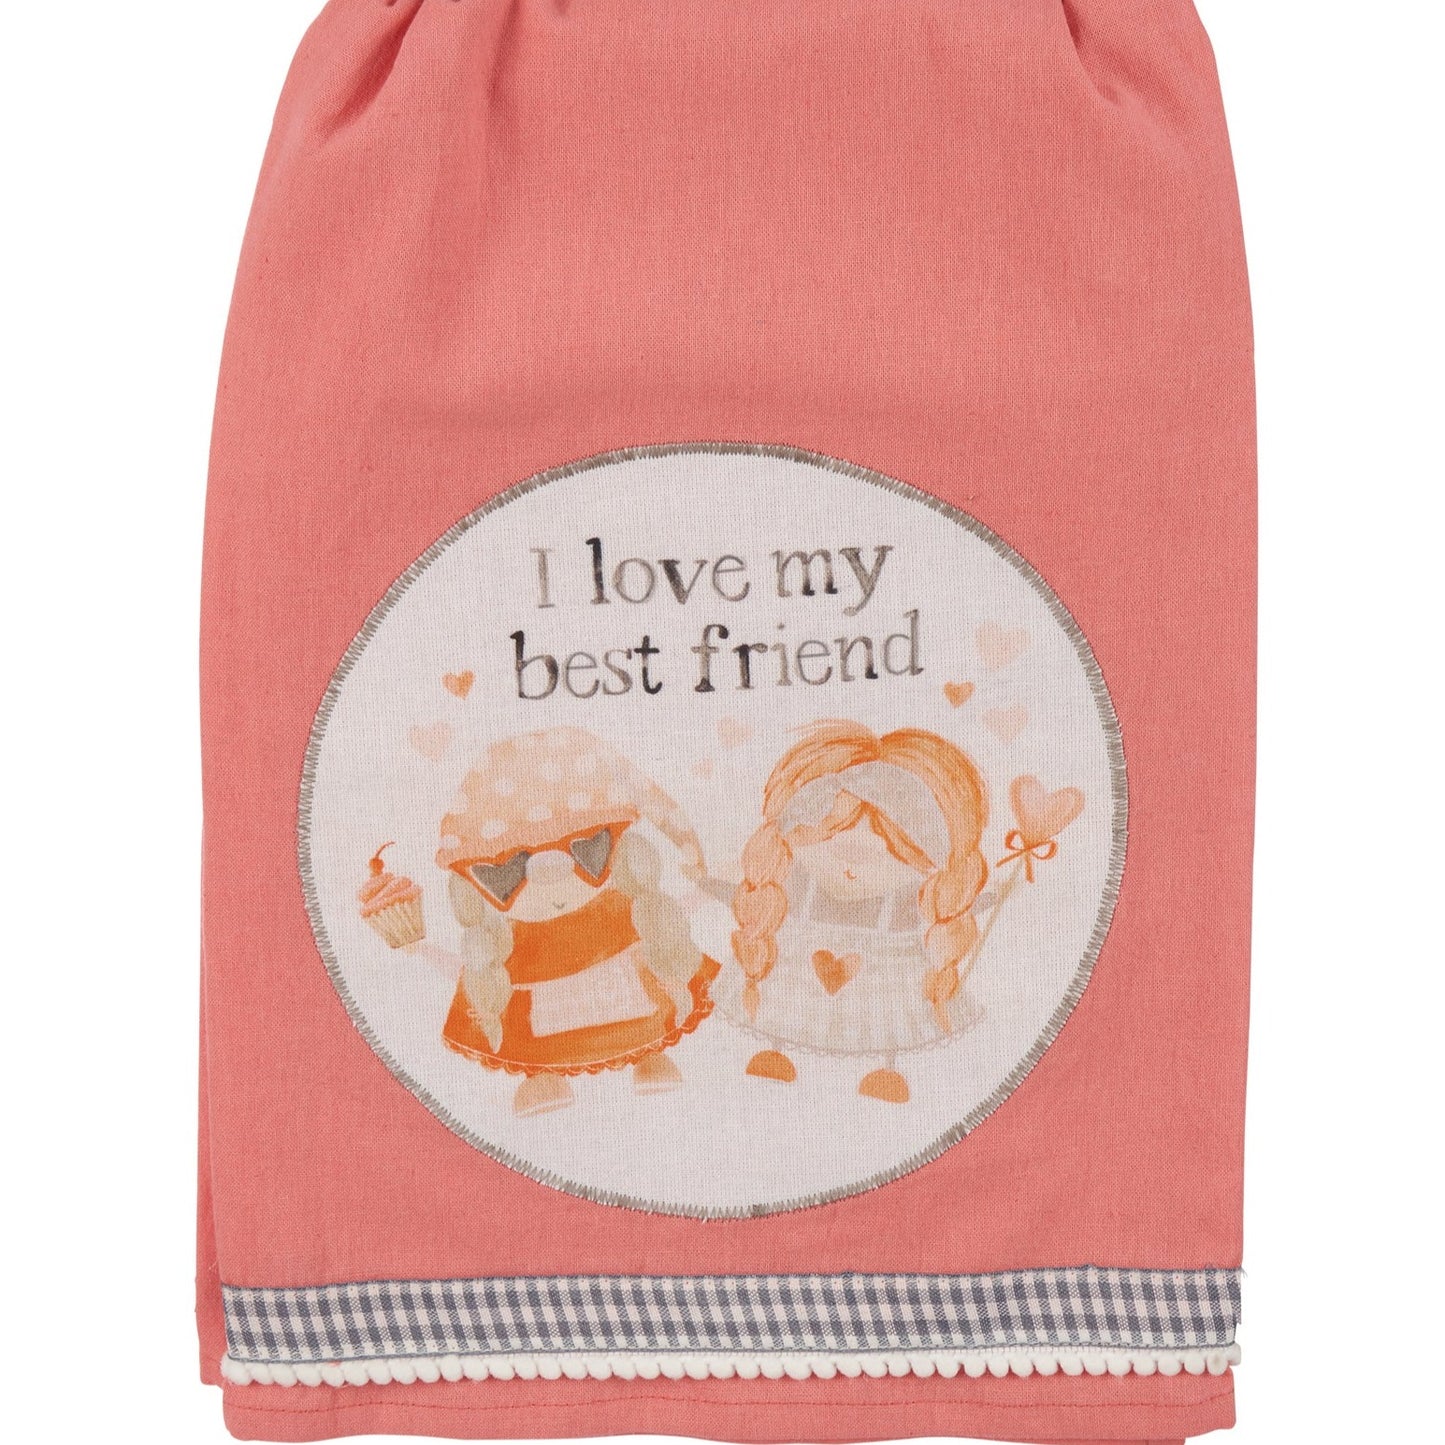 "I Love My Best Friend" -  Kitchen Towel